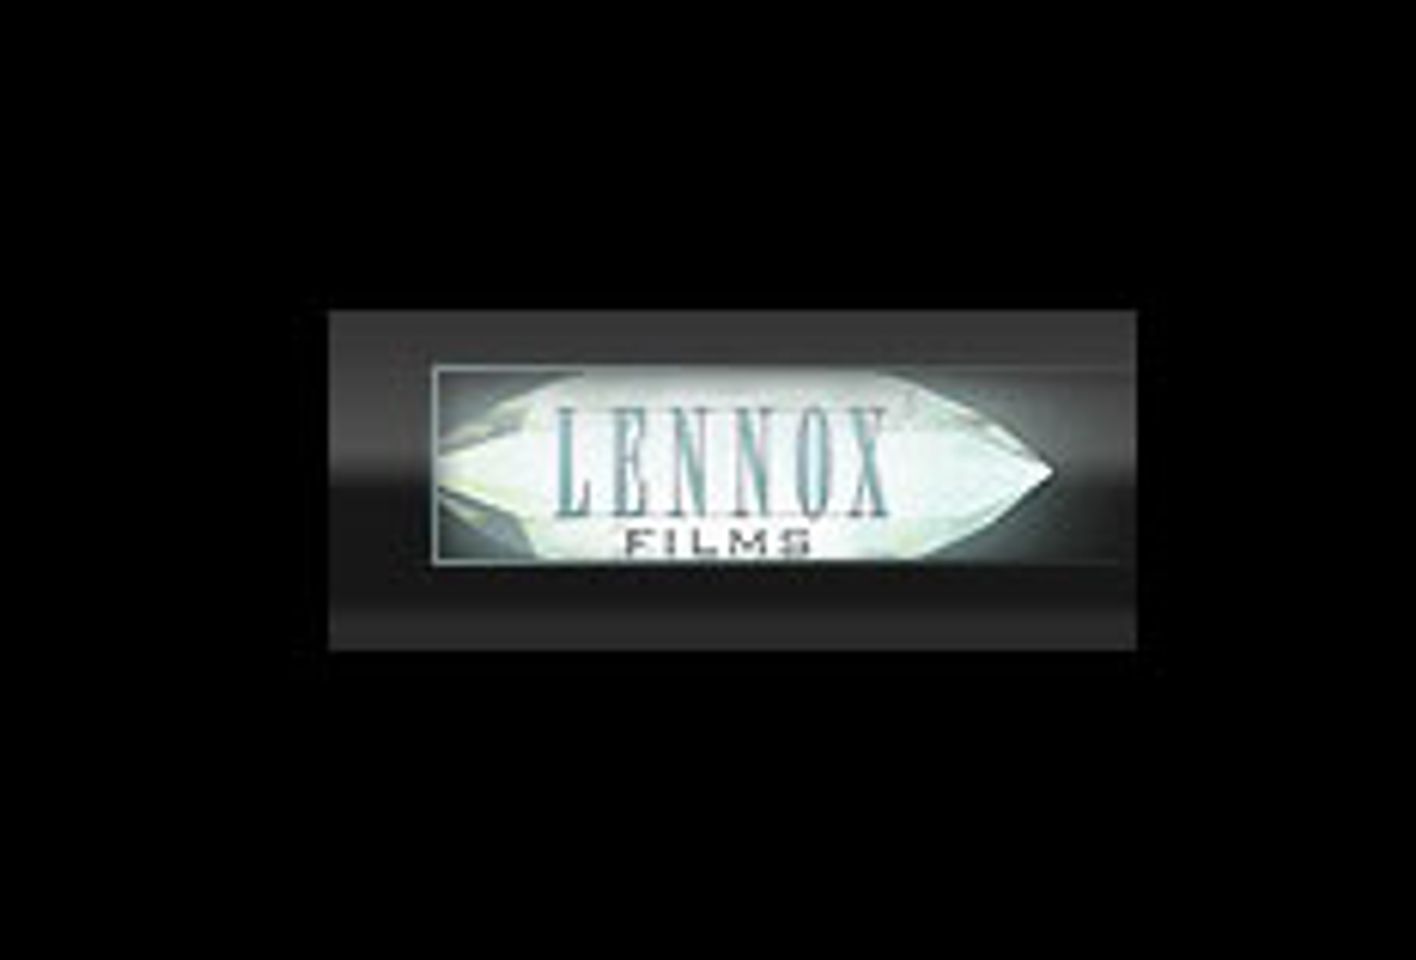 Lennox Films Receives Feminist Porn Nom